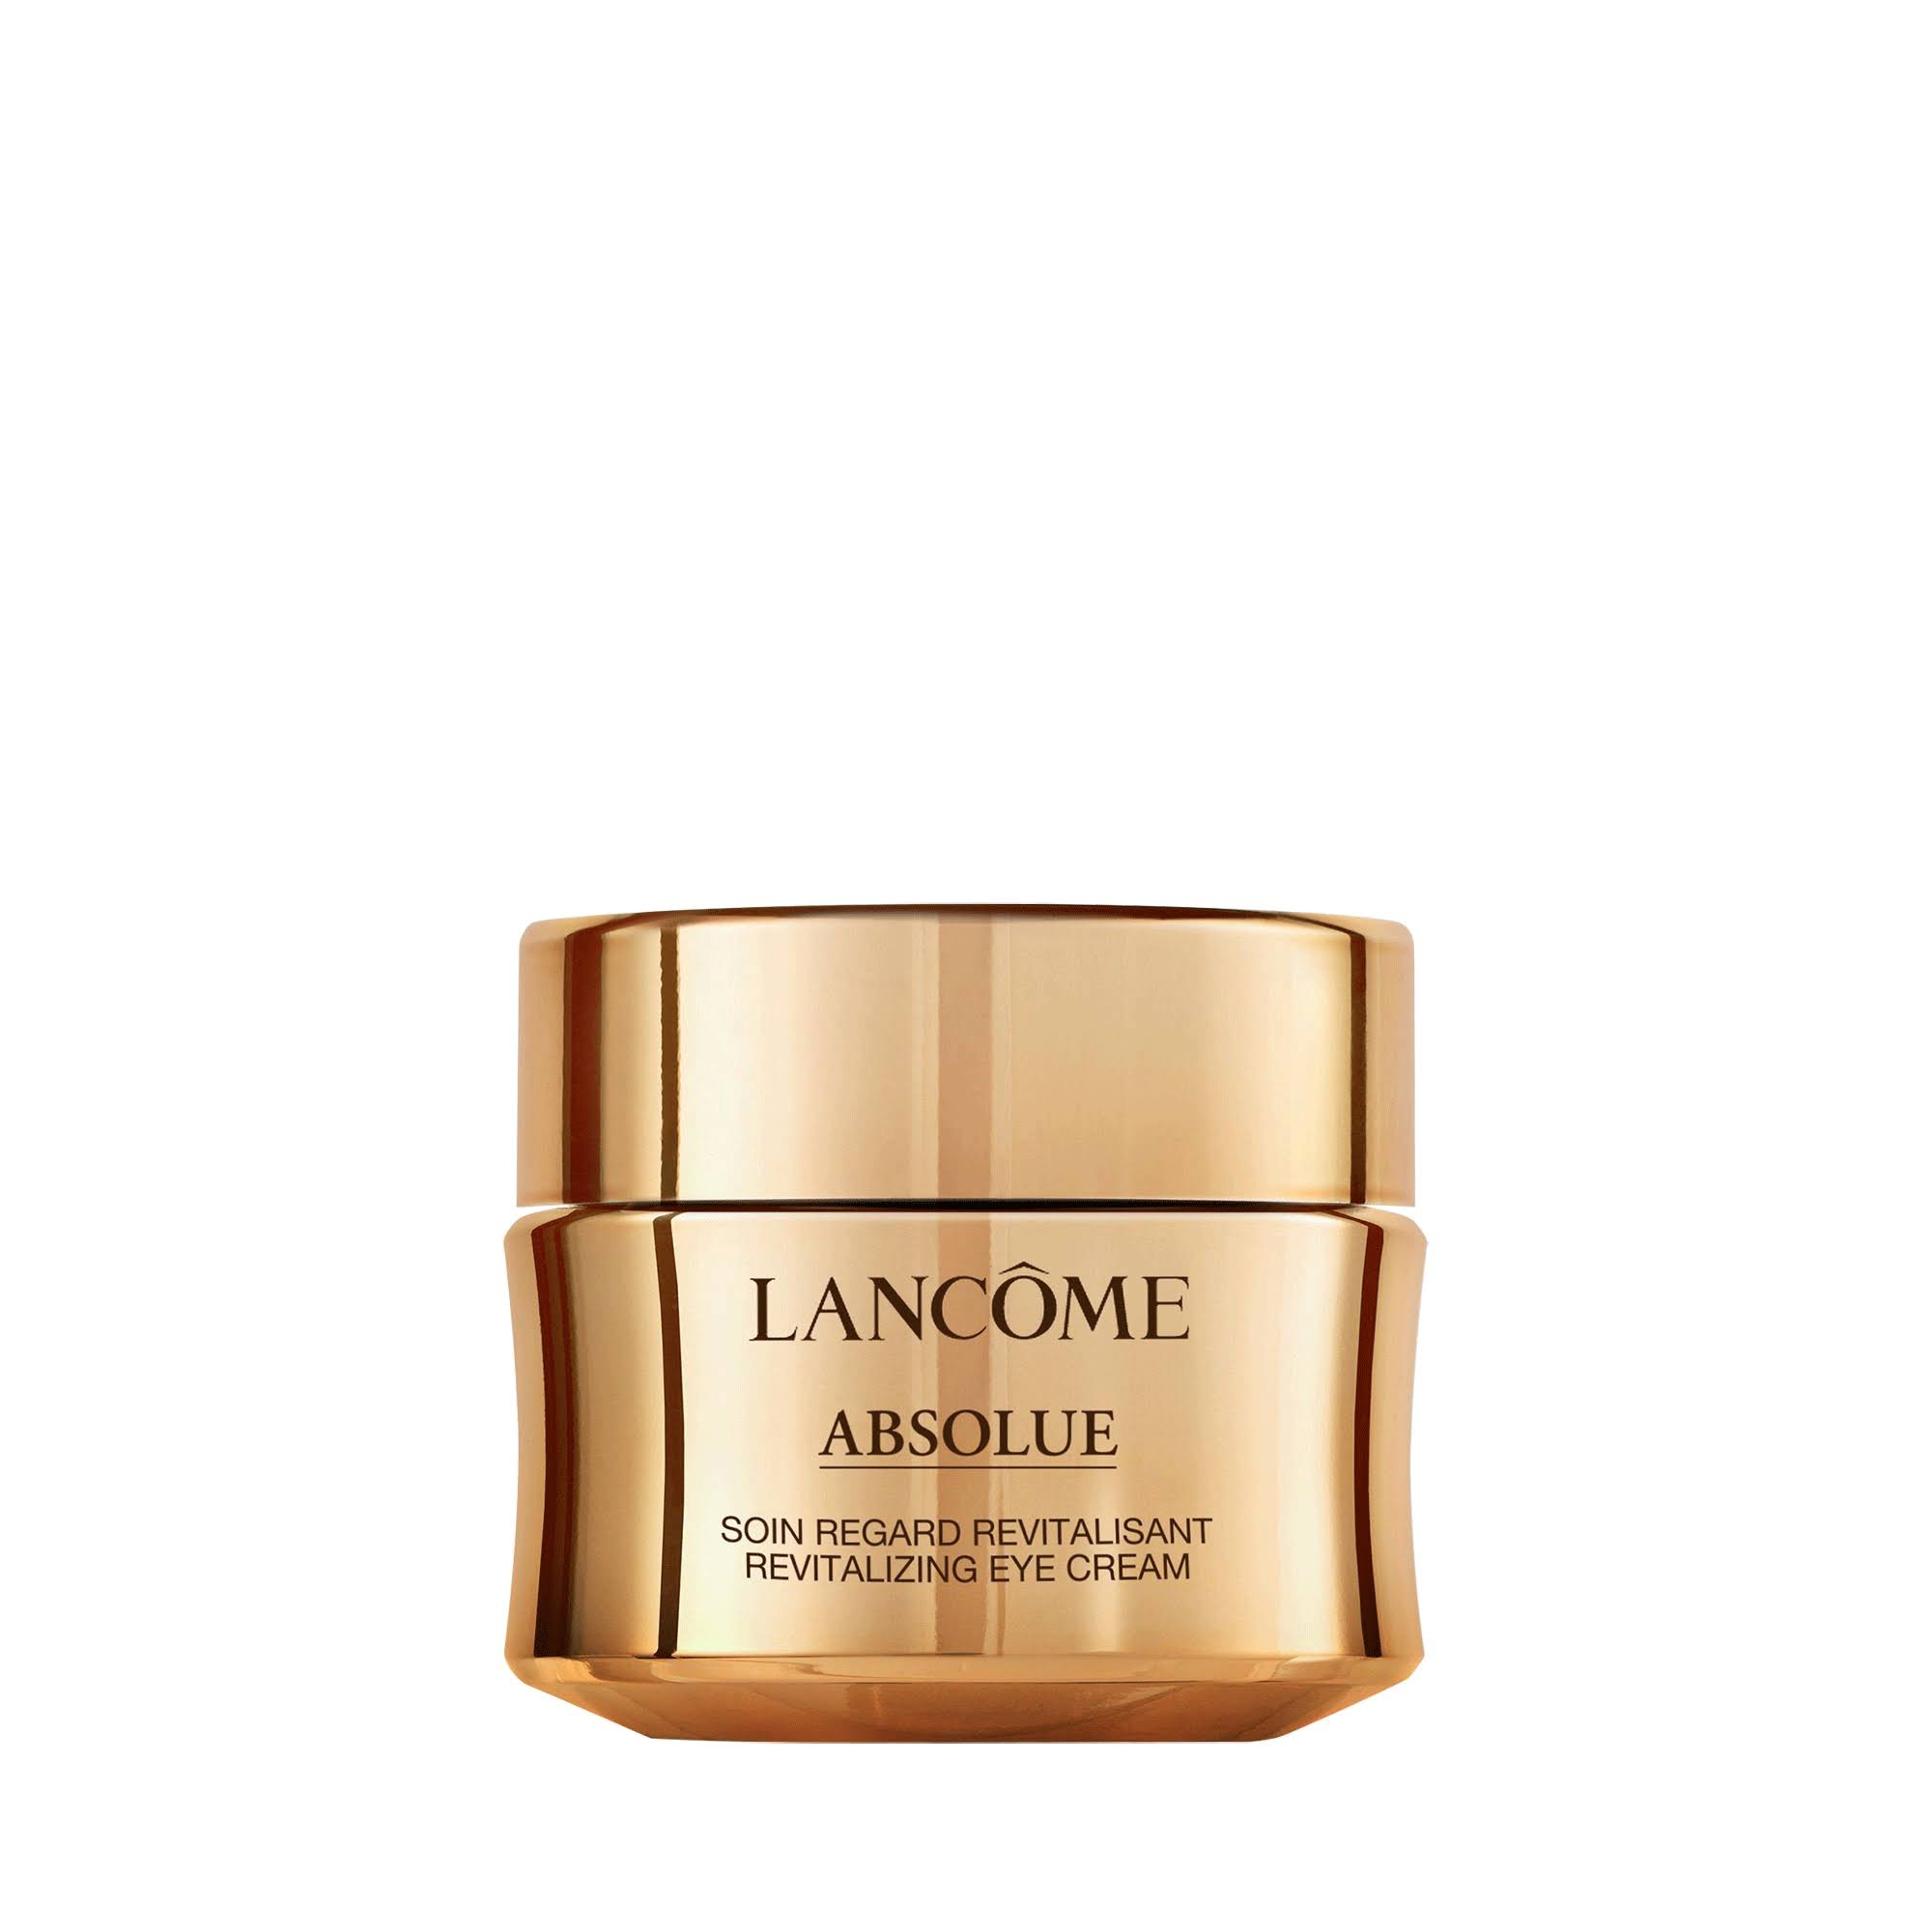 Lancôme Absolue Revitalizing Eye Cream - 20ml